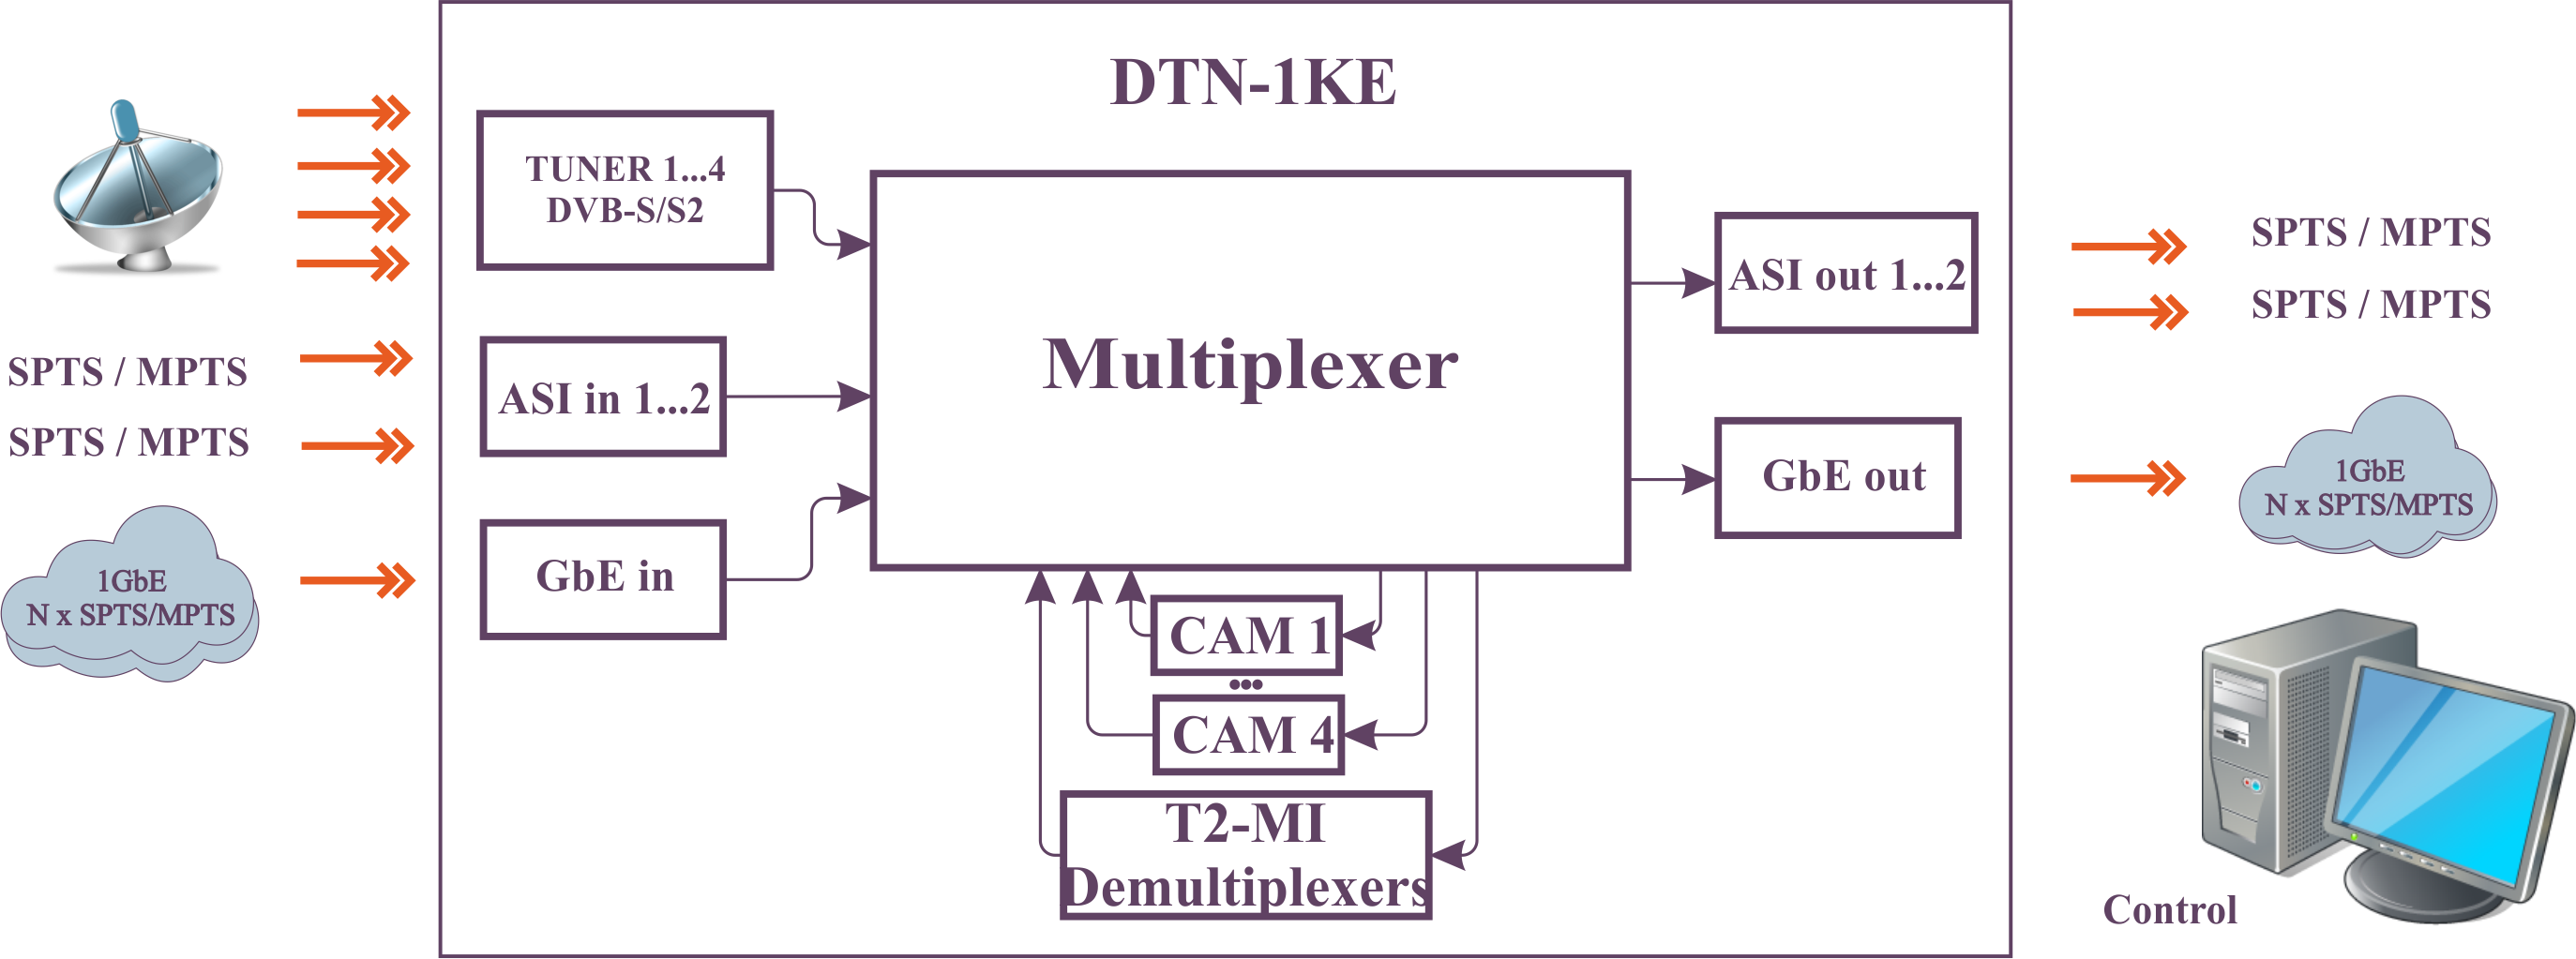 Схема DTN-1KE Приемника с 4x DVB-S2 тюнерами CI и T2-MI